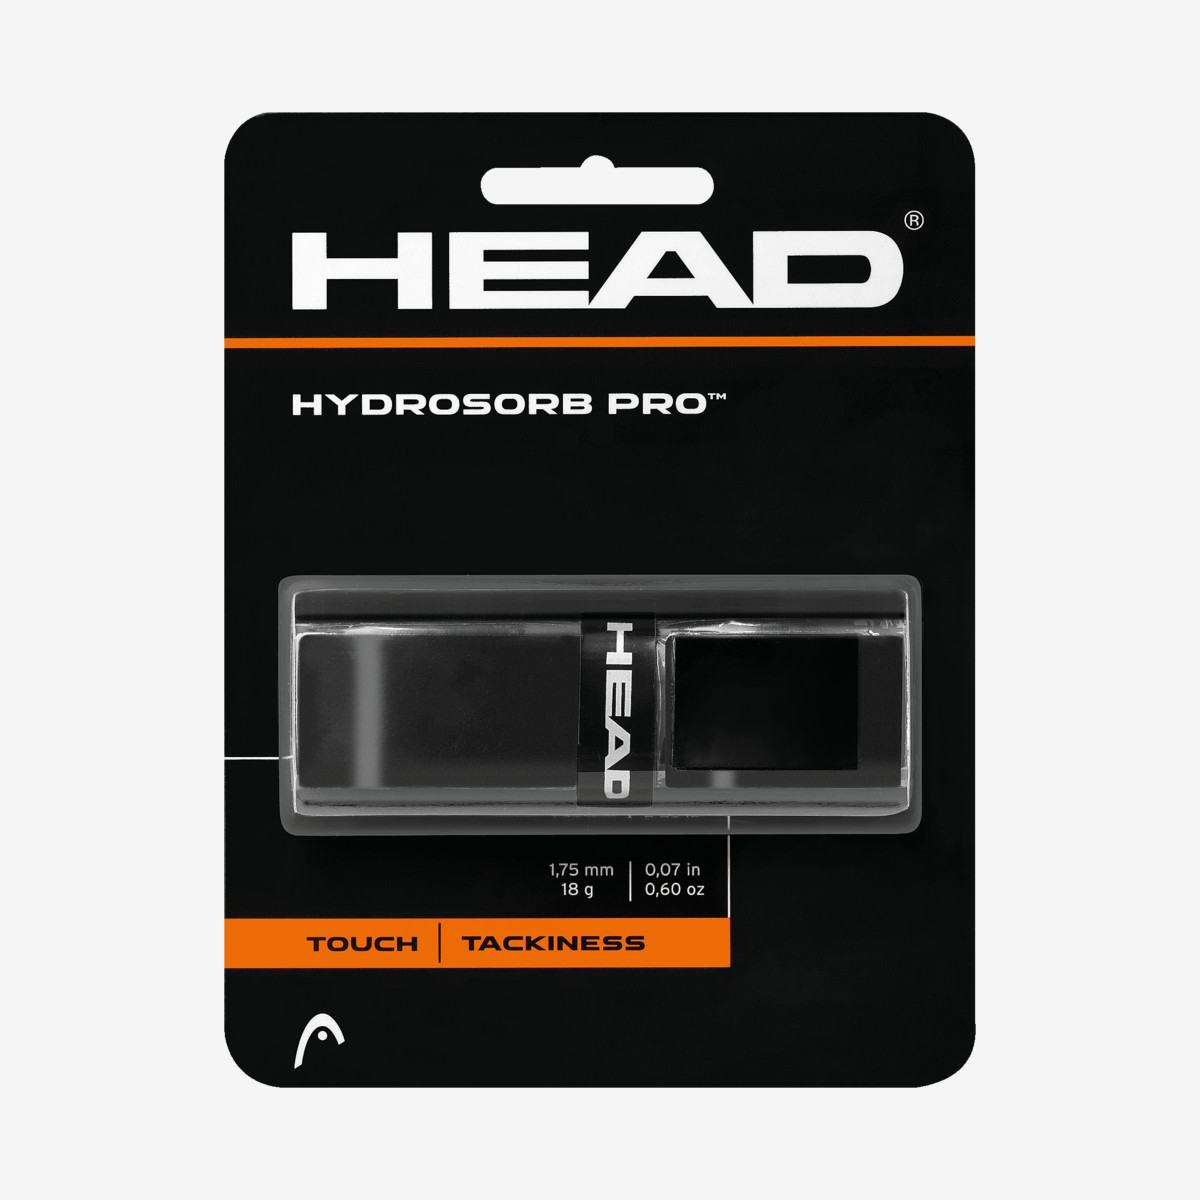 hydrosorb pro